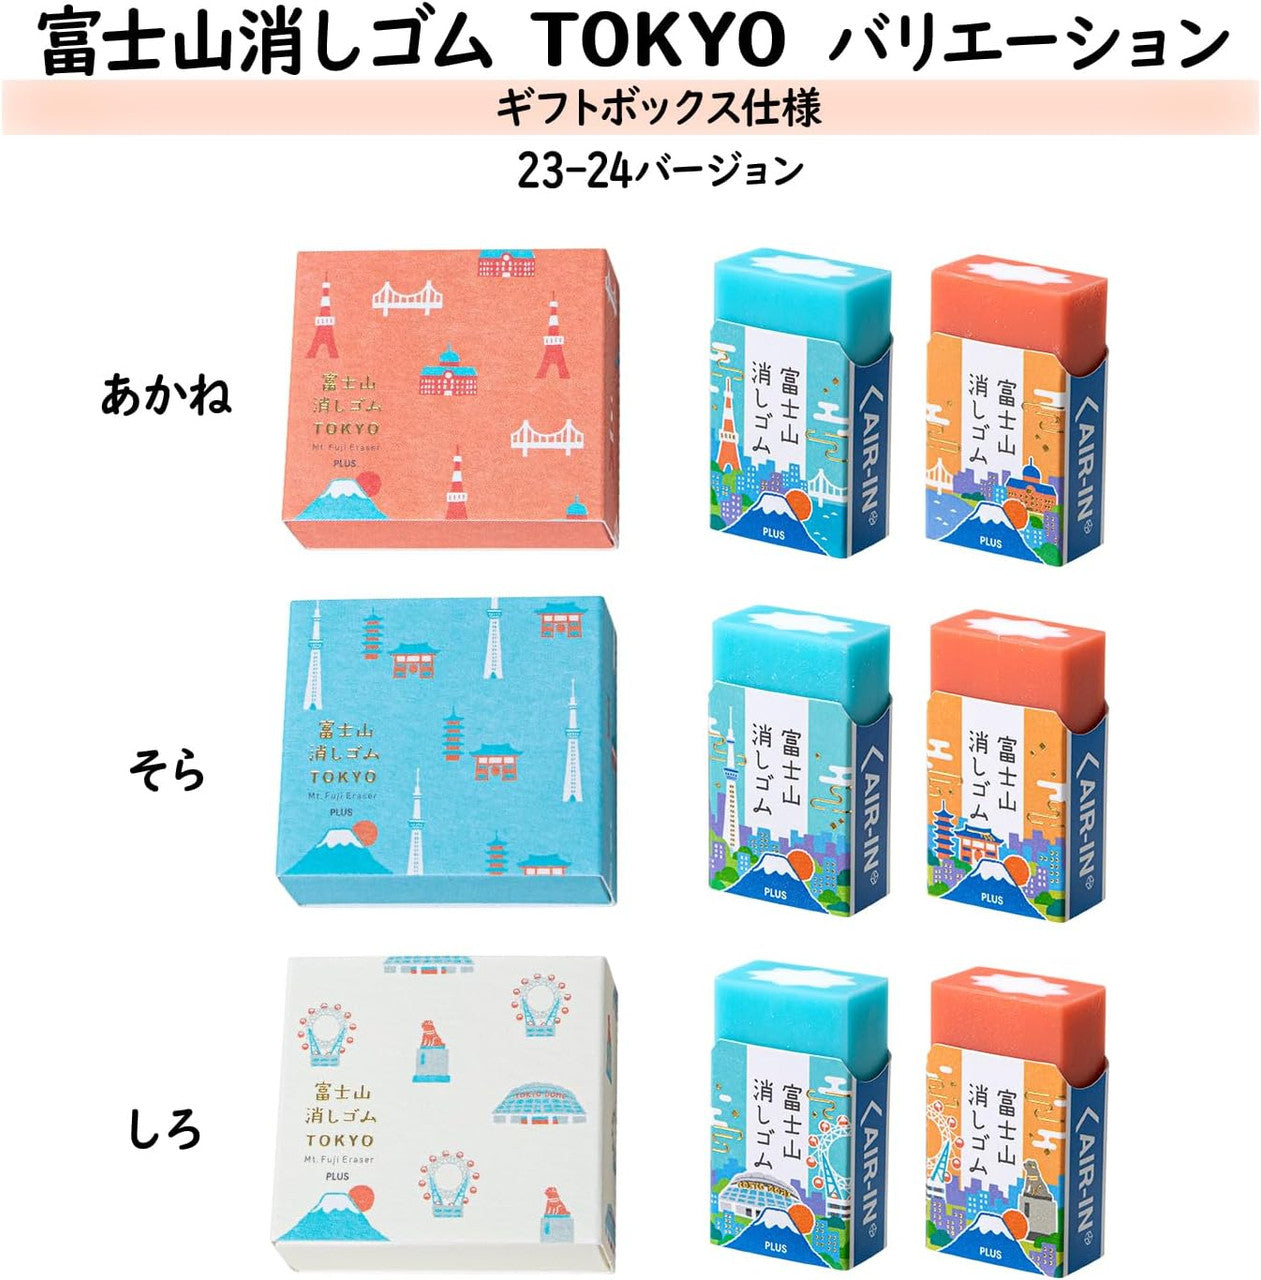 Tokyo Limited Edition Twin Pack / Air Inn Mt. Fuji Eraser · PLUS